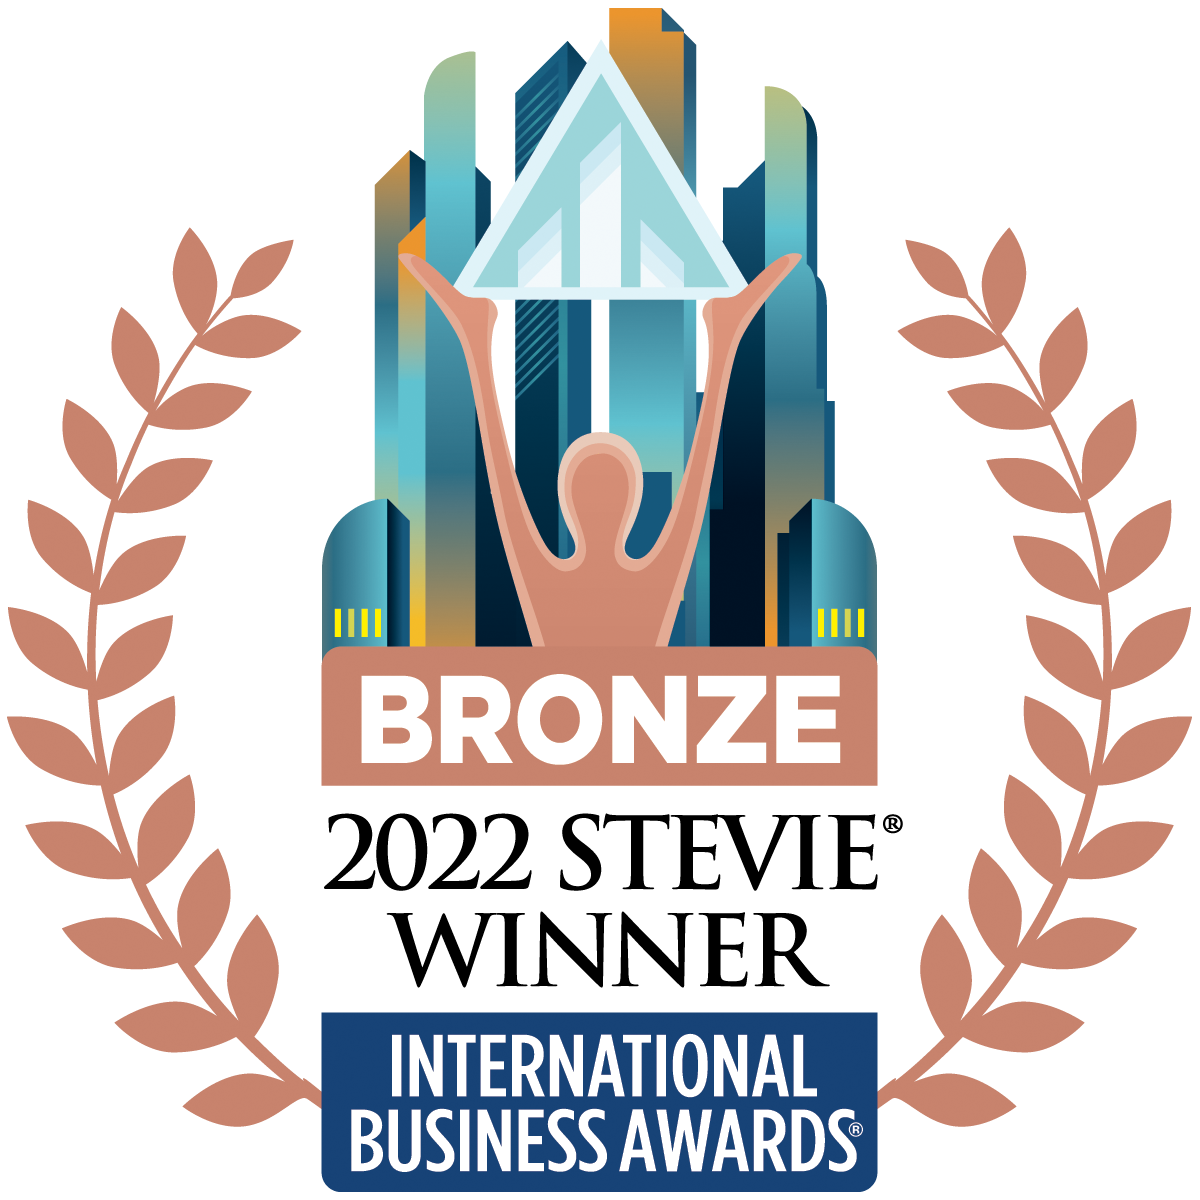 2022 Stevie Winner, International Business Award, bronze